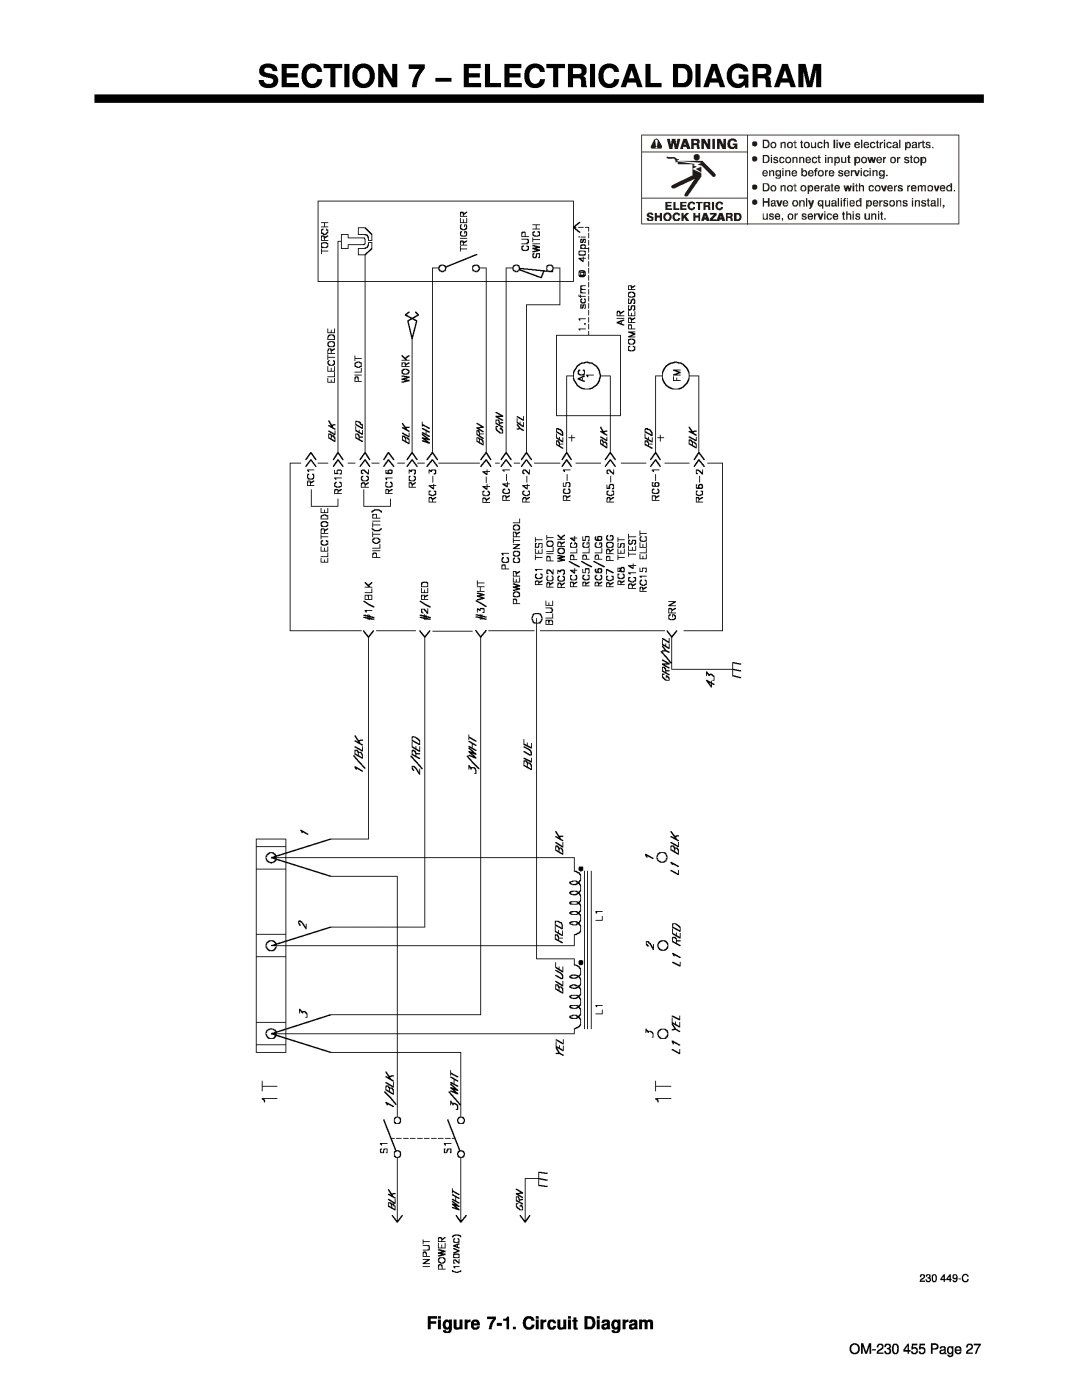 Hobart Welding Products OM-230 455D manual Electrical Diagram, 1. Circuit Diagram 